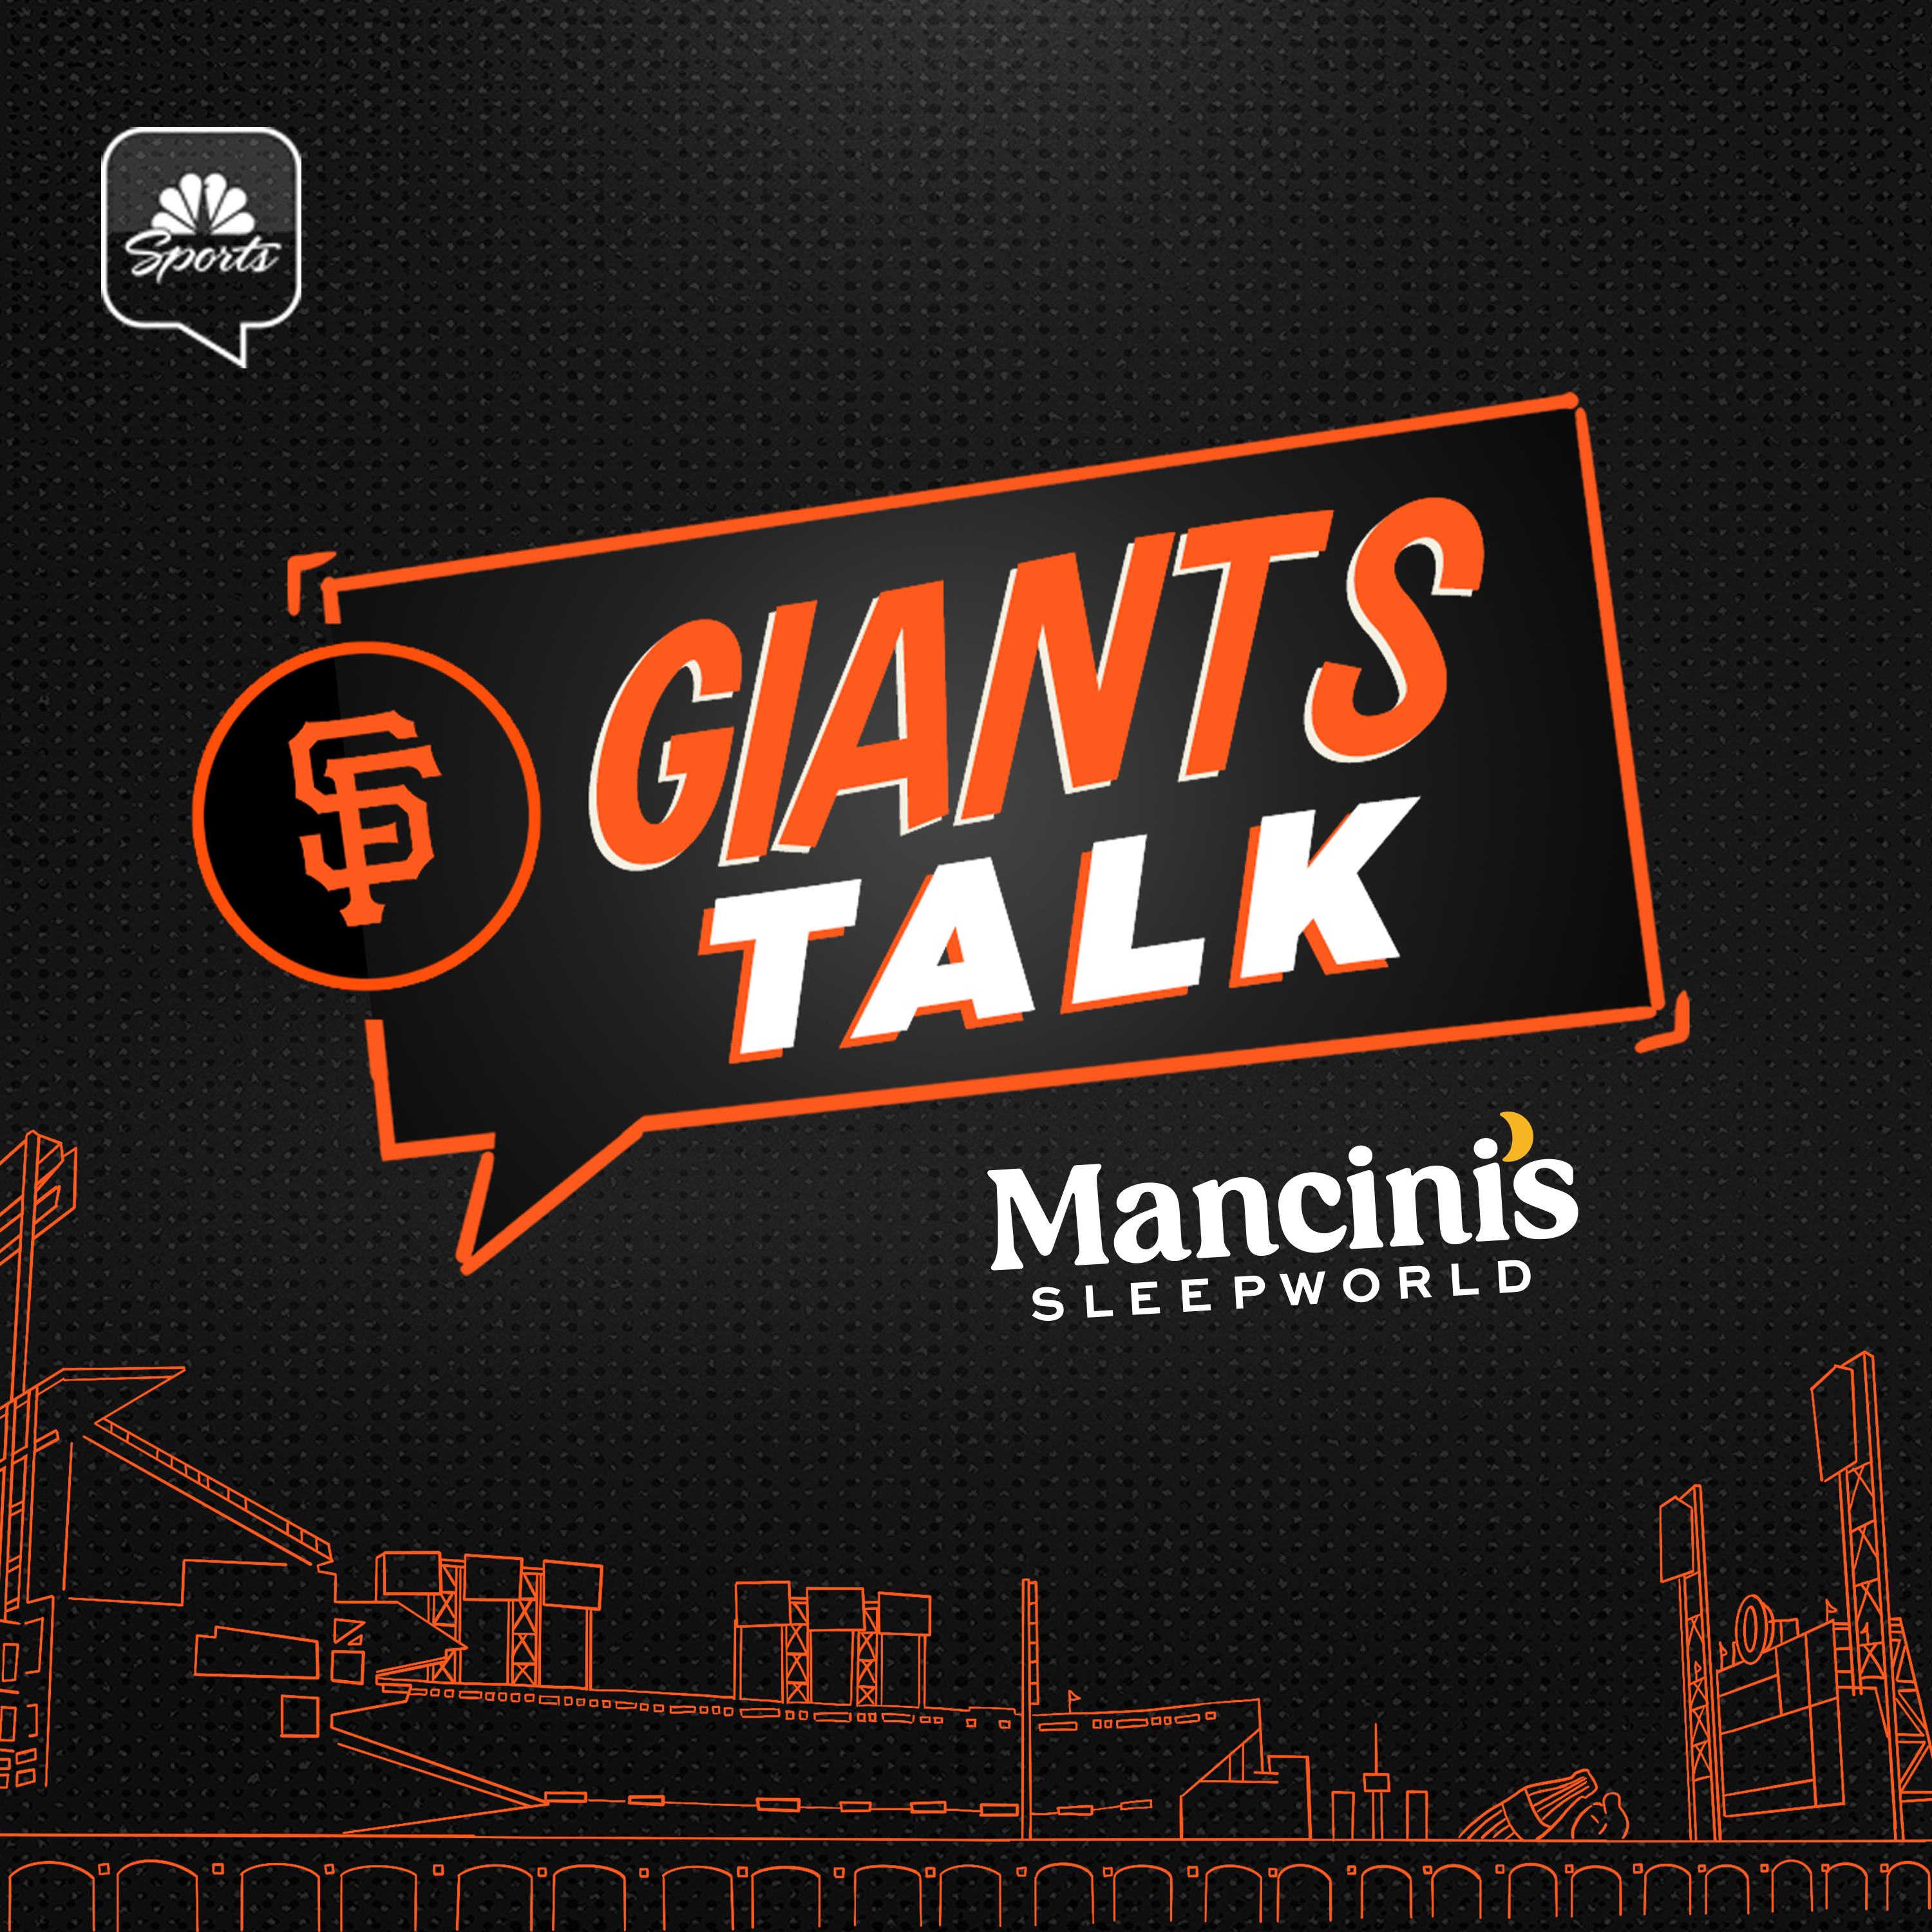 Giants Talk: A San Francisco Giants Podcast